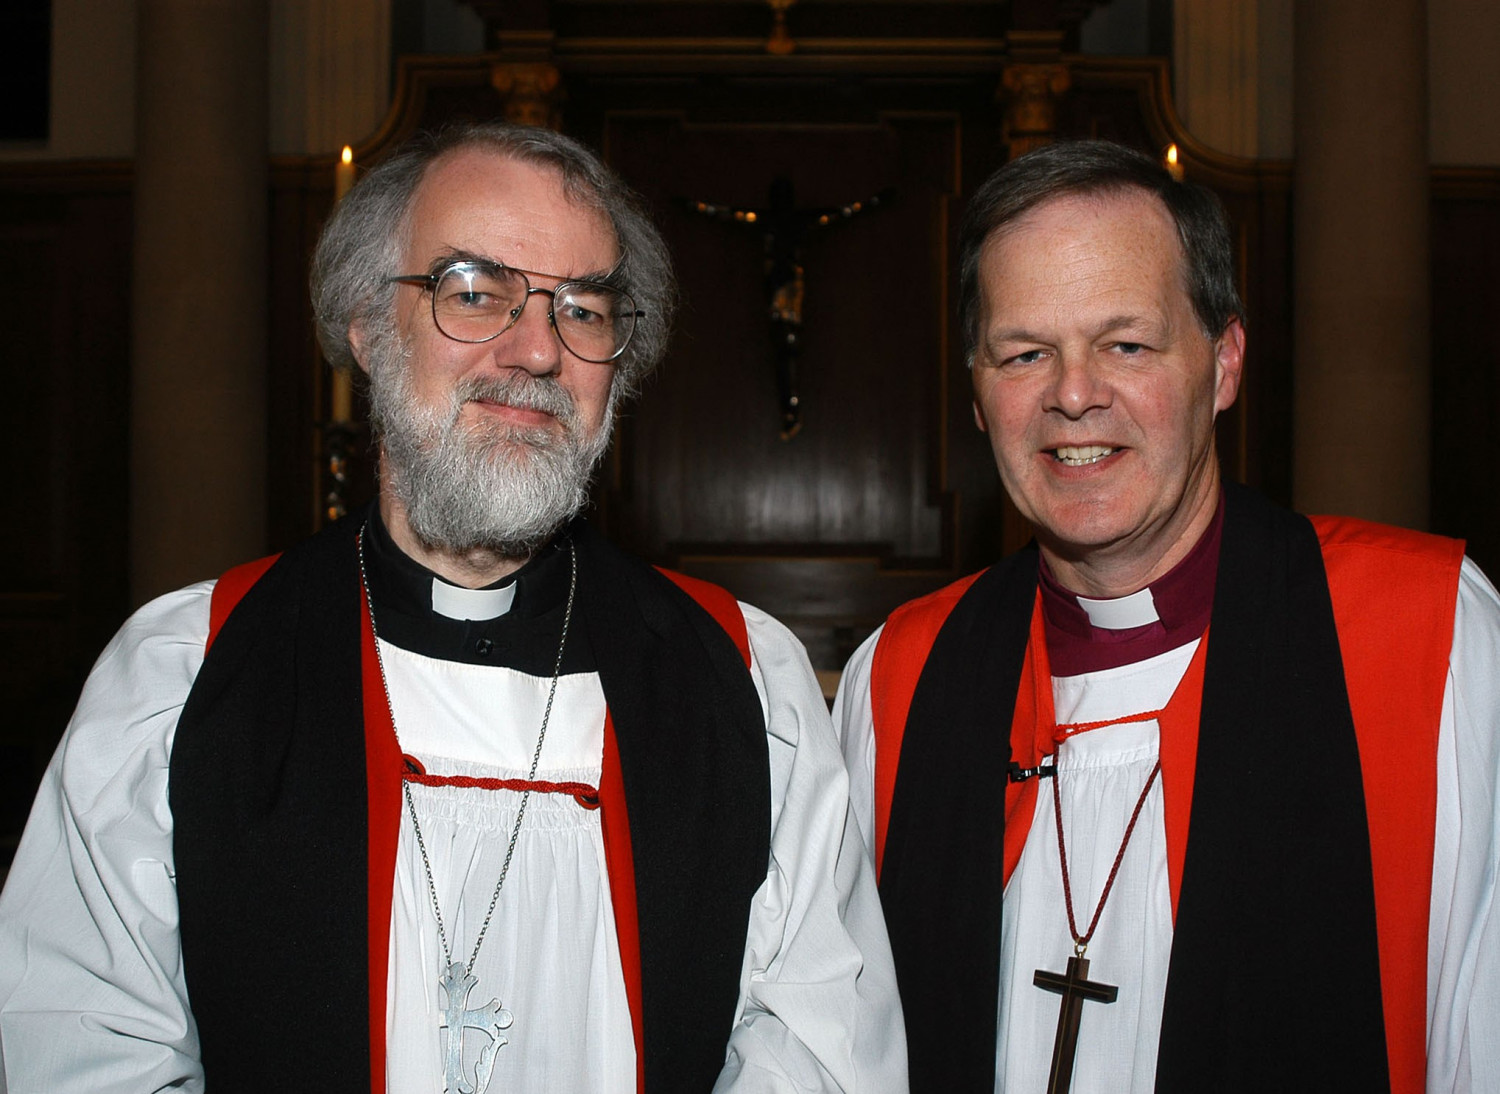 Bishop Jonathan and the Archbishop of Canterbury